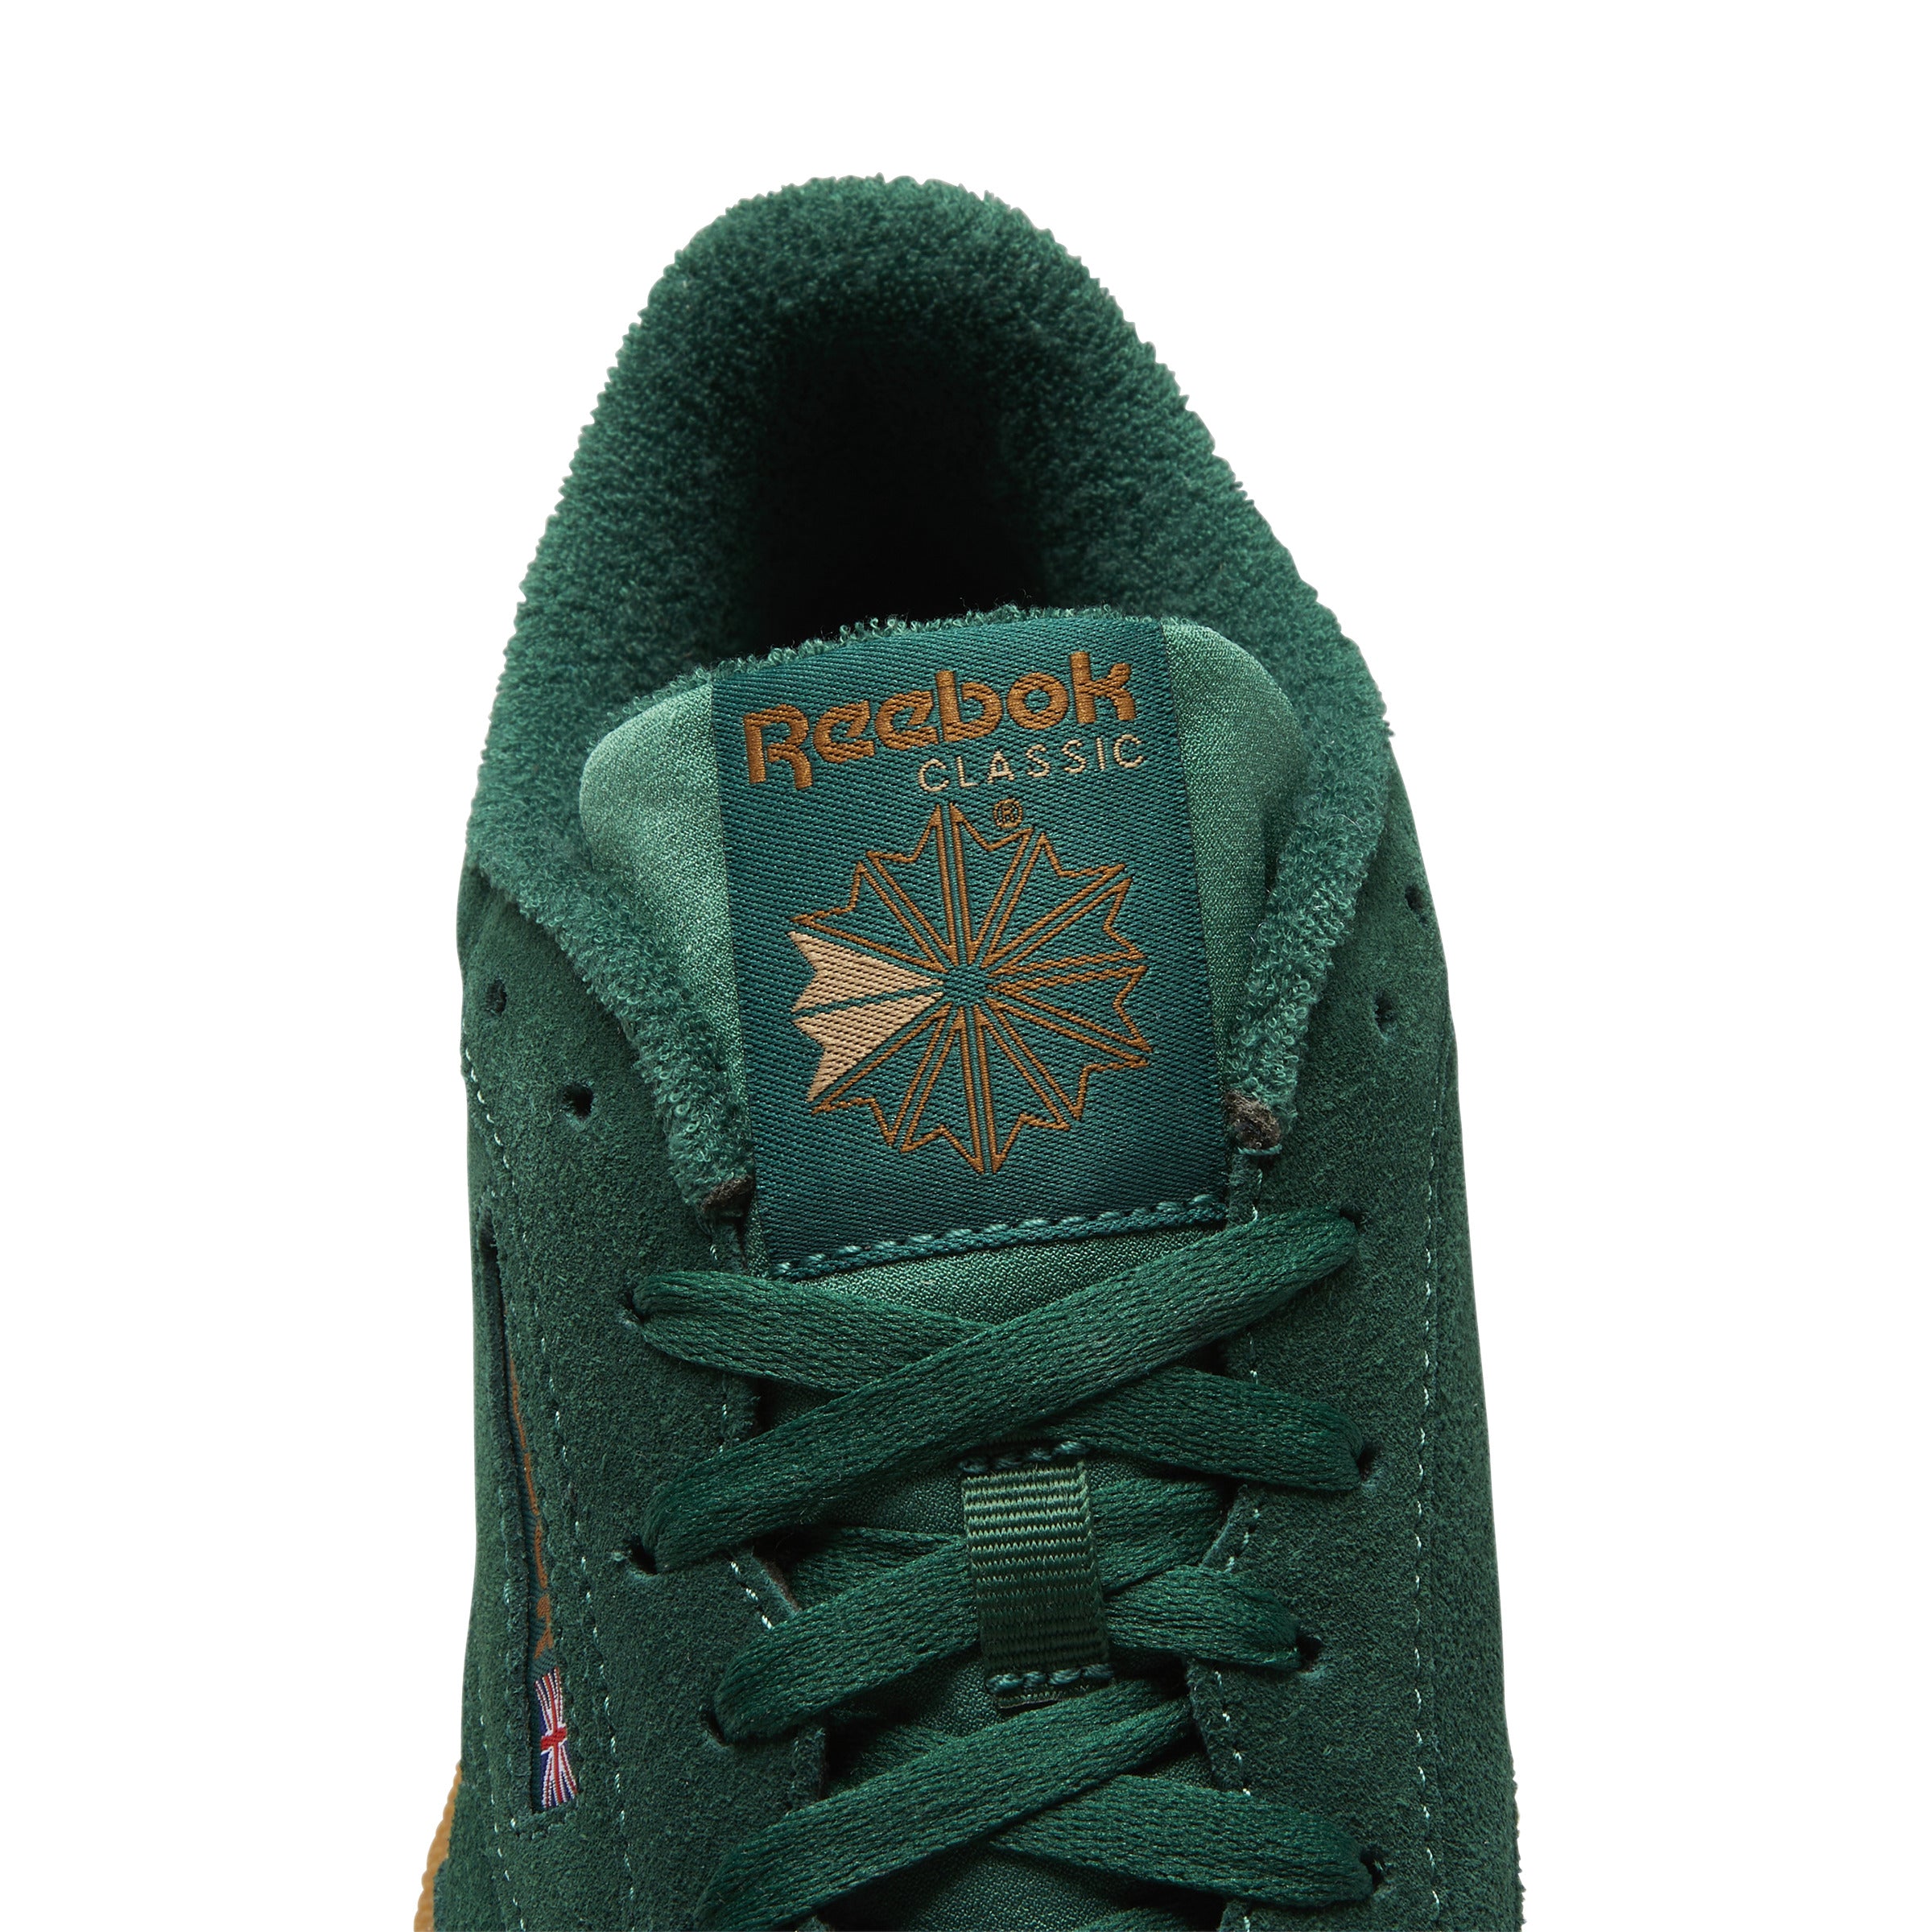 Reebok Tennis Shoes - Club C 85 - Dark Green